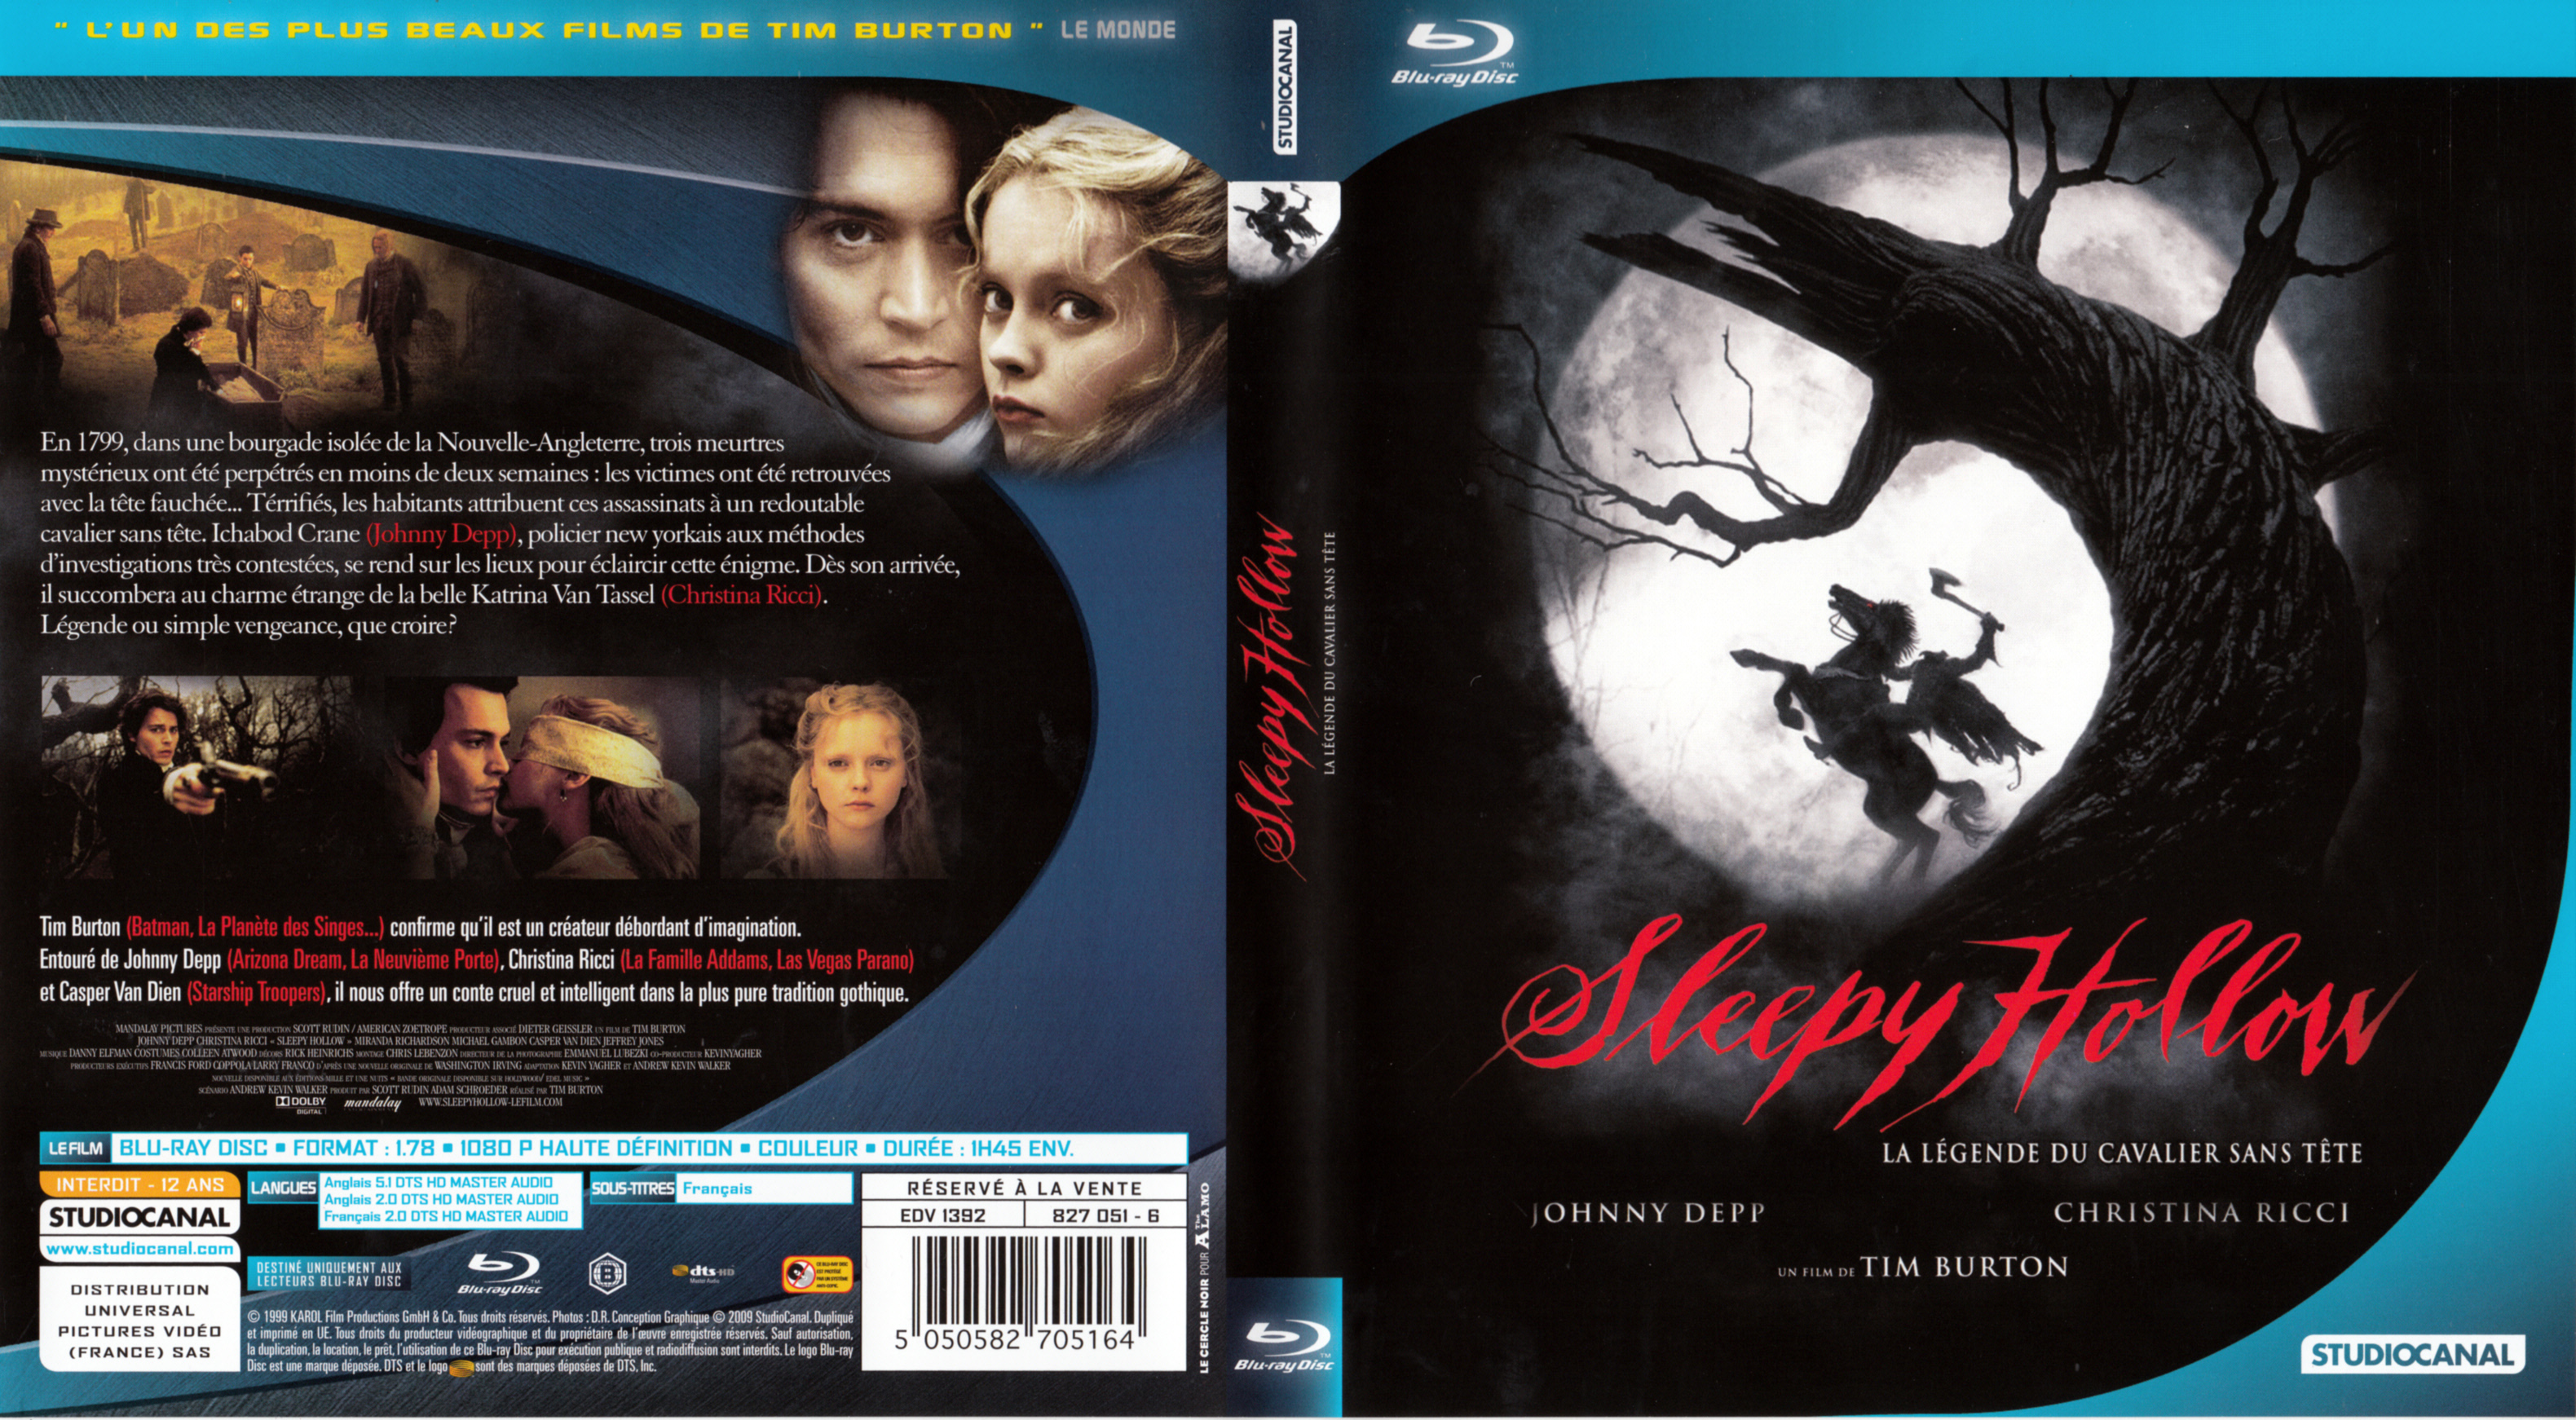 Jaquette DVD Sleepy hollow (BLU-RAY) v2